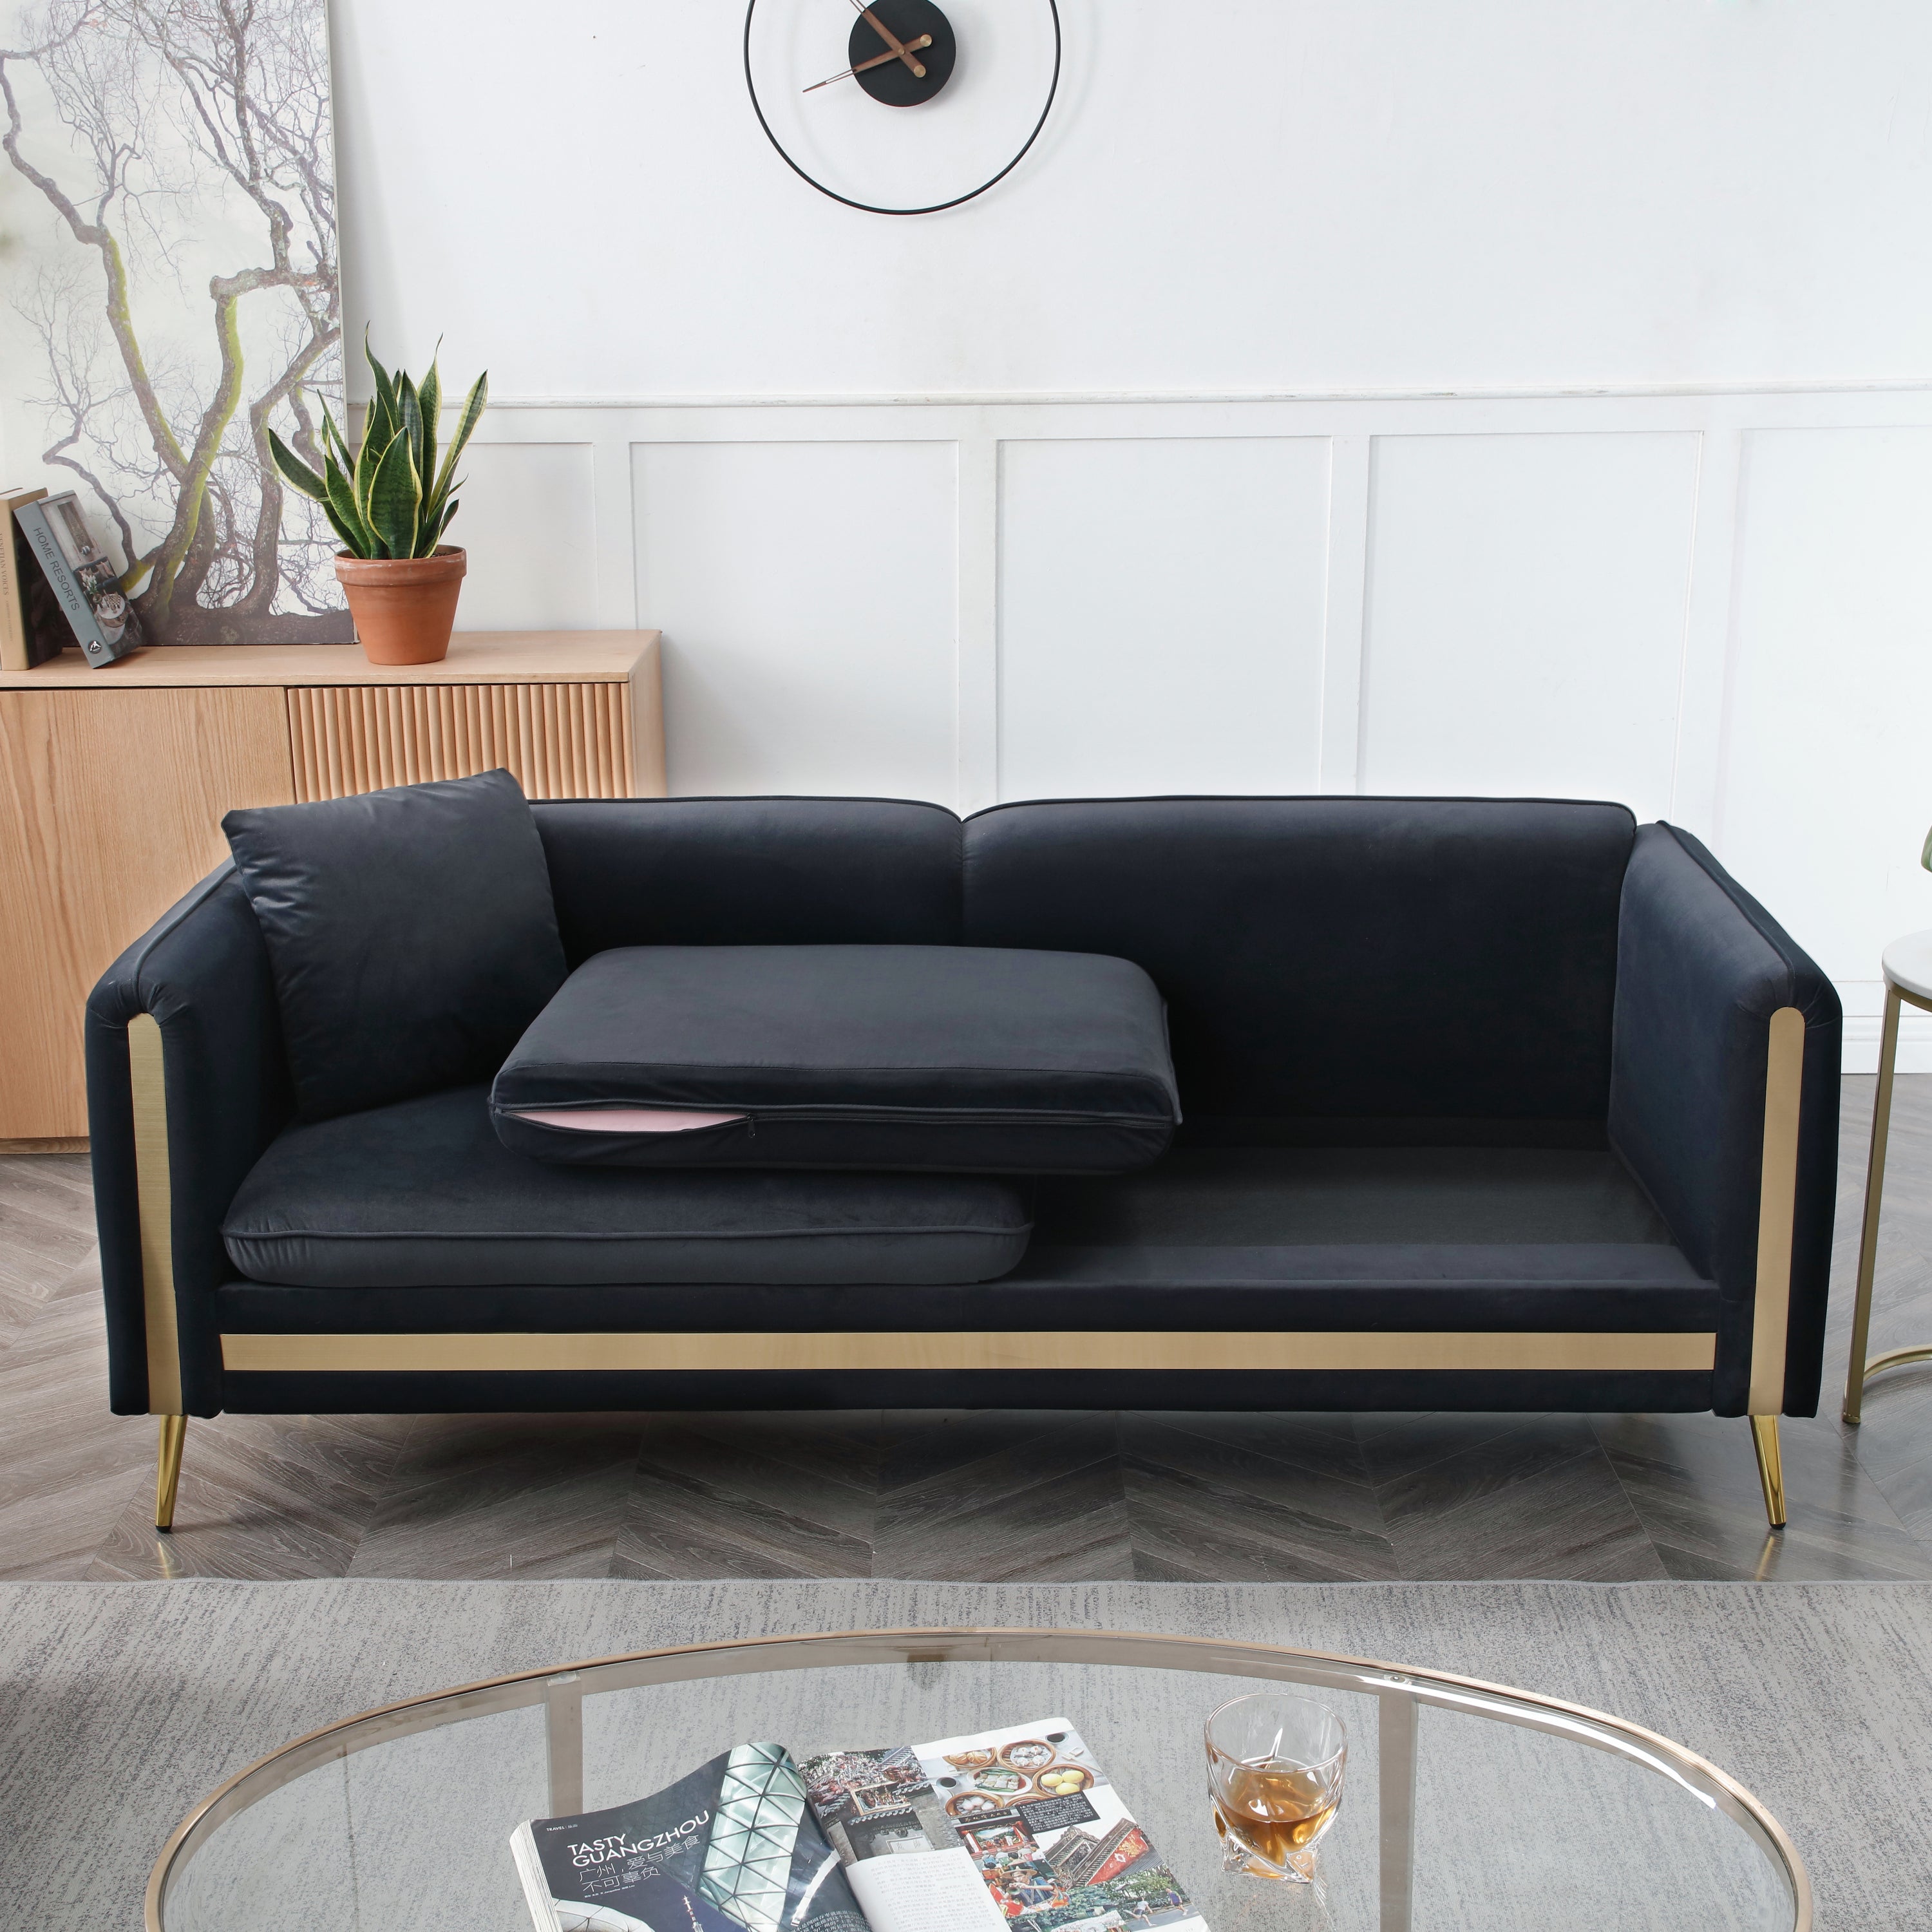 77.2” Modern Upholstered Velvet Sofa with Removable Cushions, Side Pocket,2 Pillows,Black